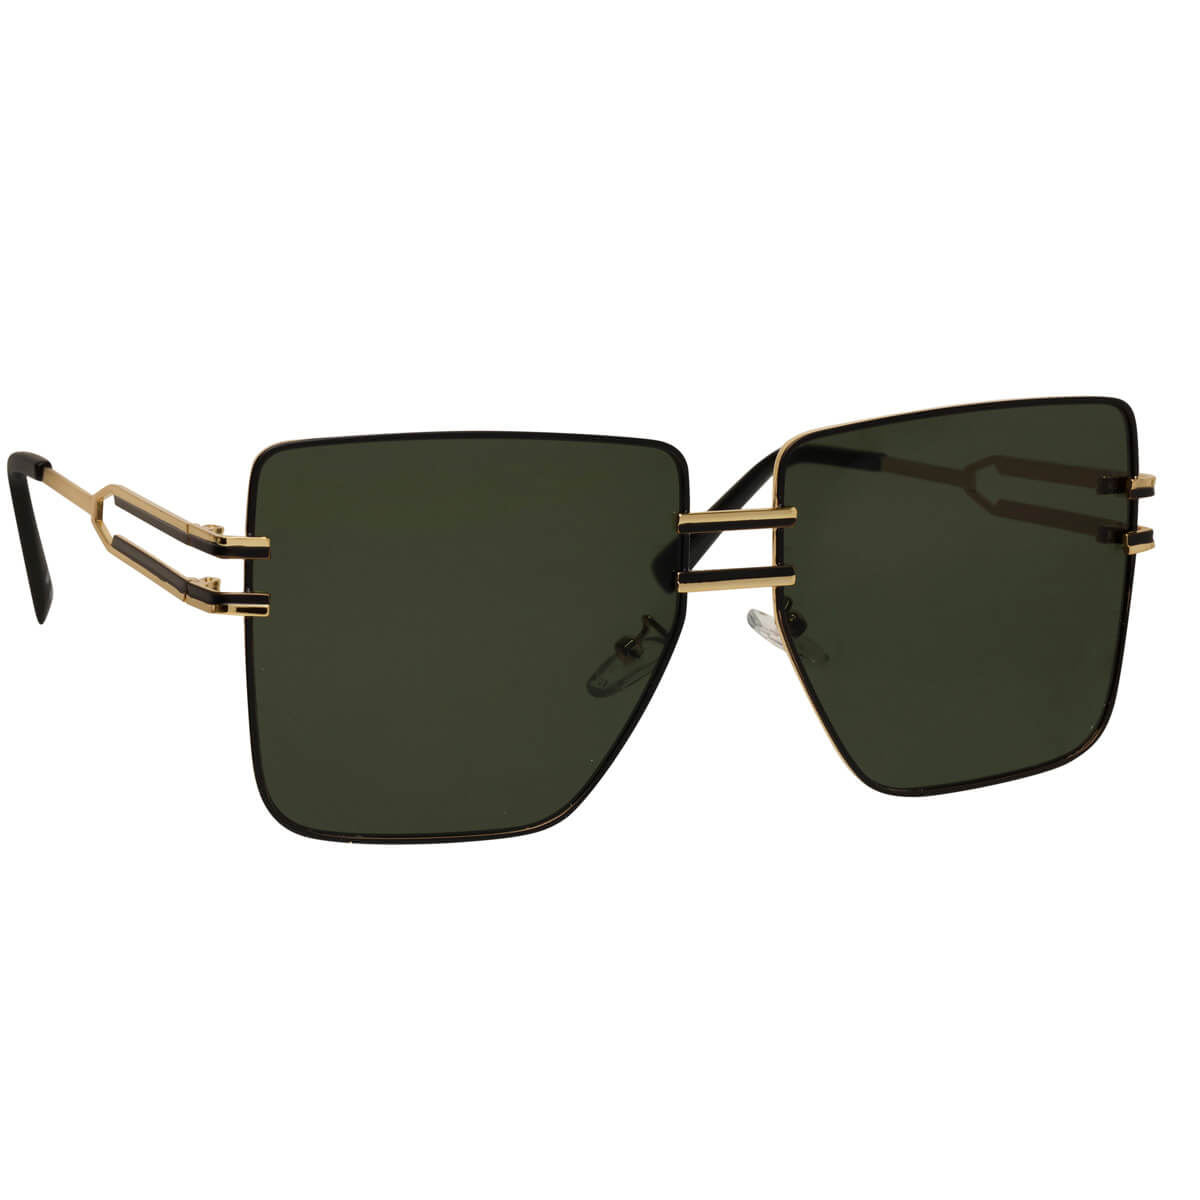 Big square sunglasses with striped frames